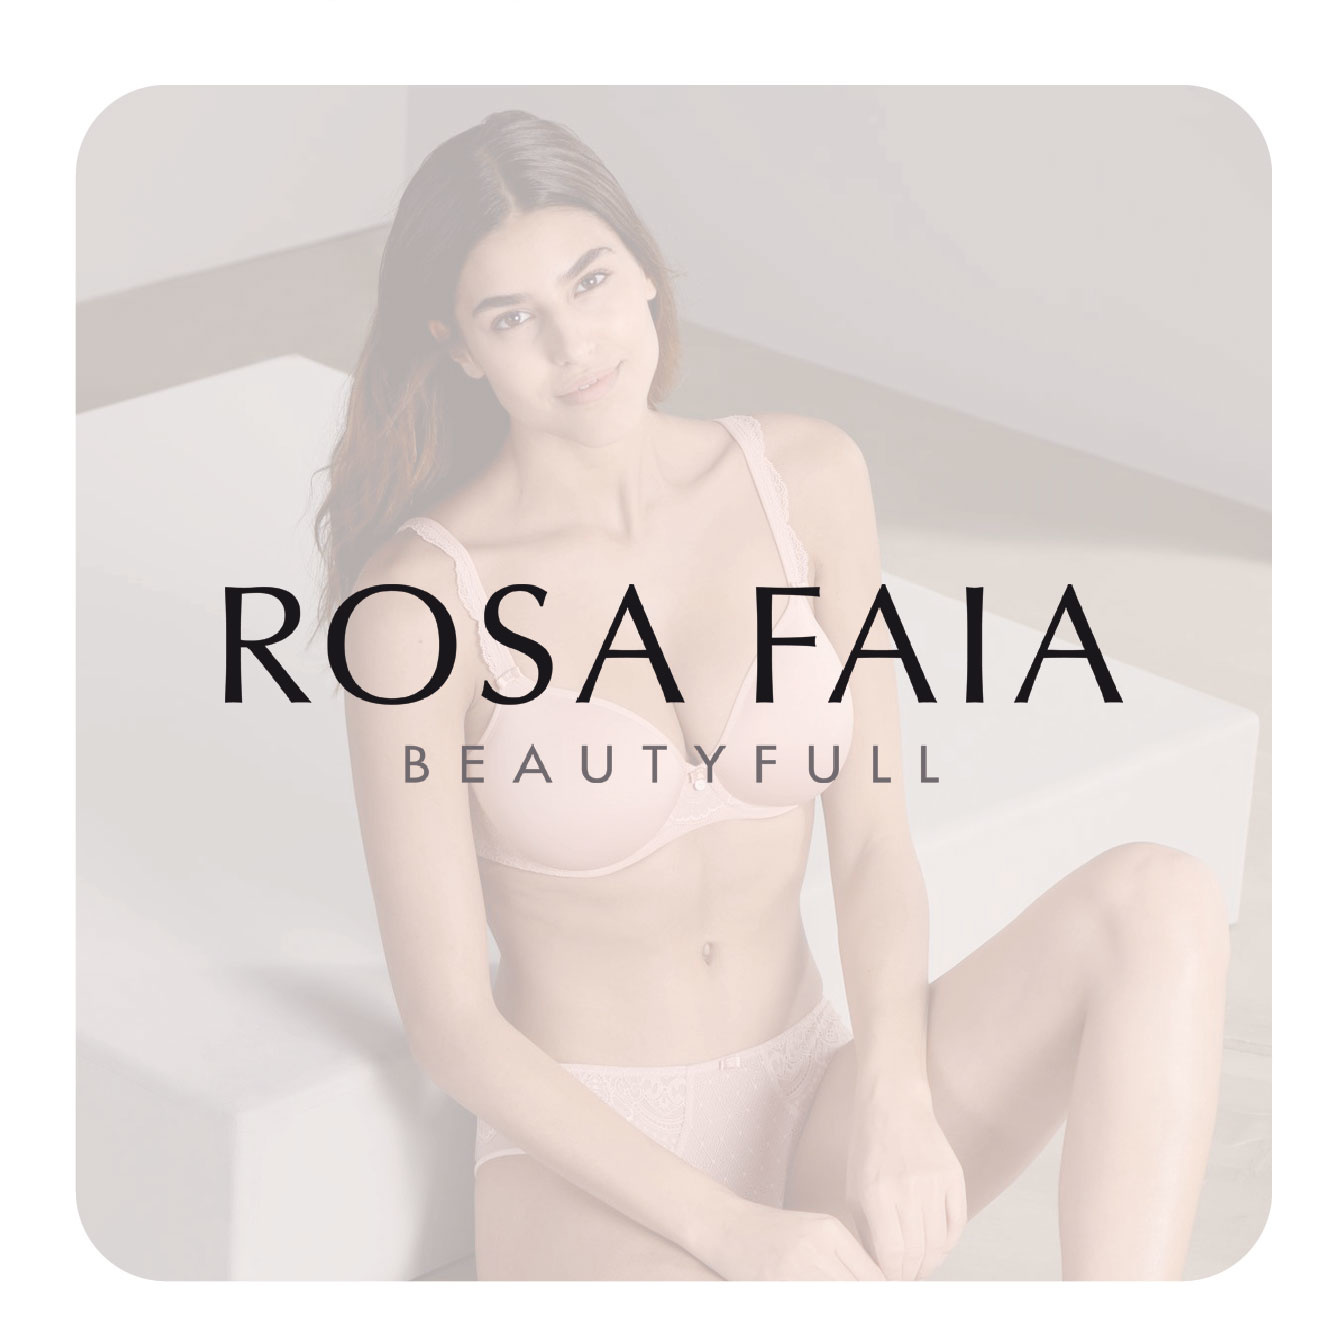 EnJOY Yourself! Introducing Rosa Faia's JOY Collection - Lingerie